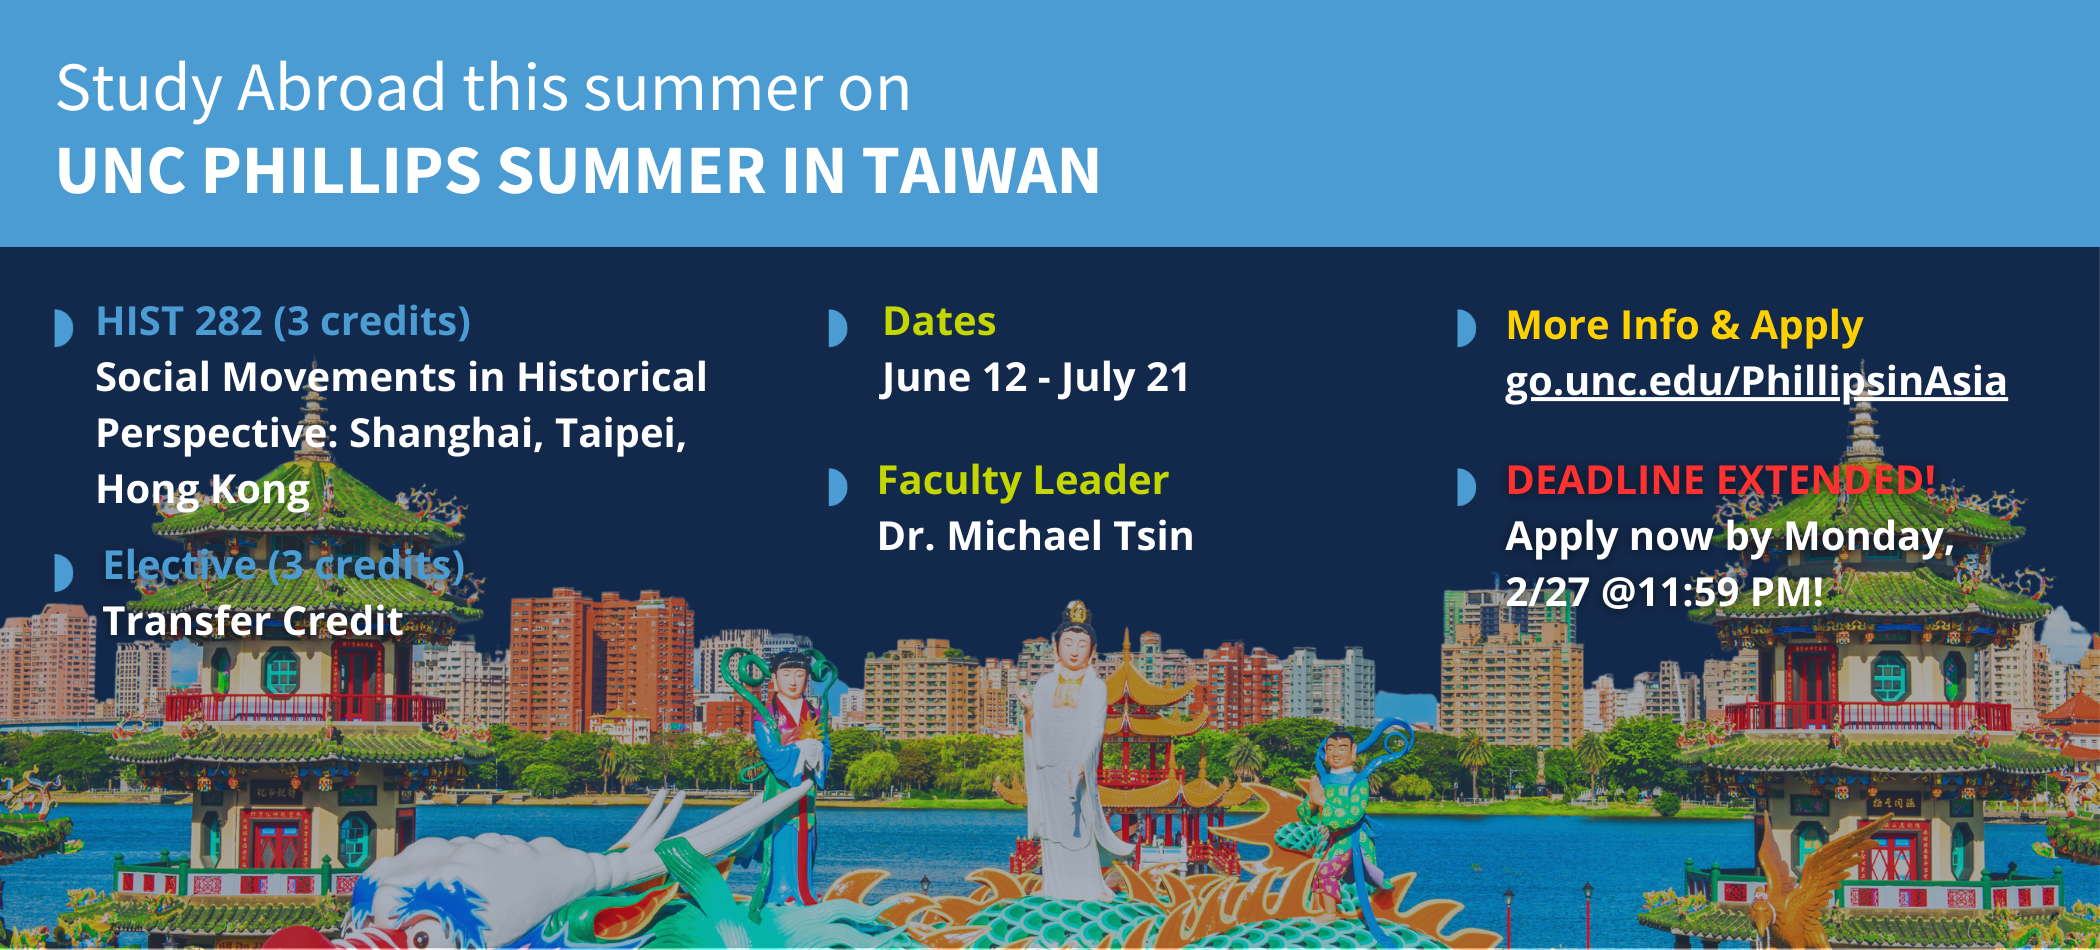 UNC Phillips Summer in Taiwan website slider 2